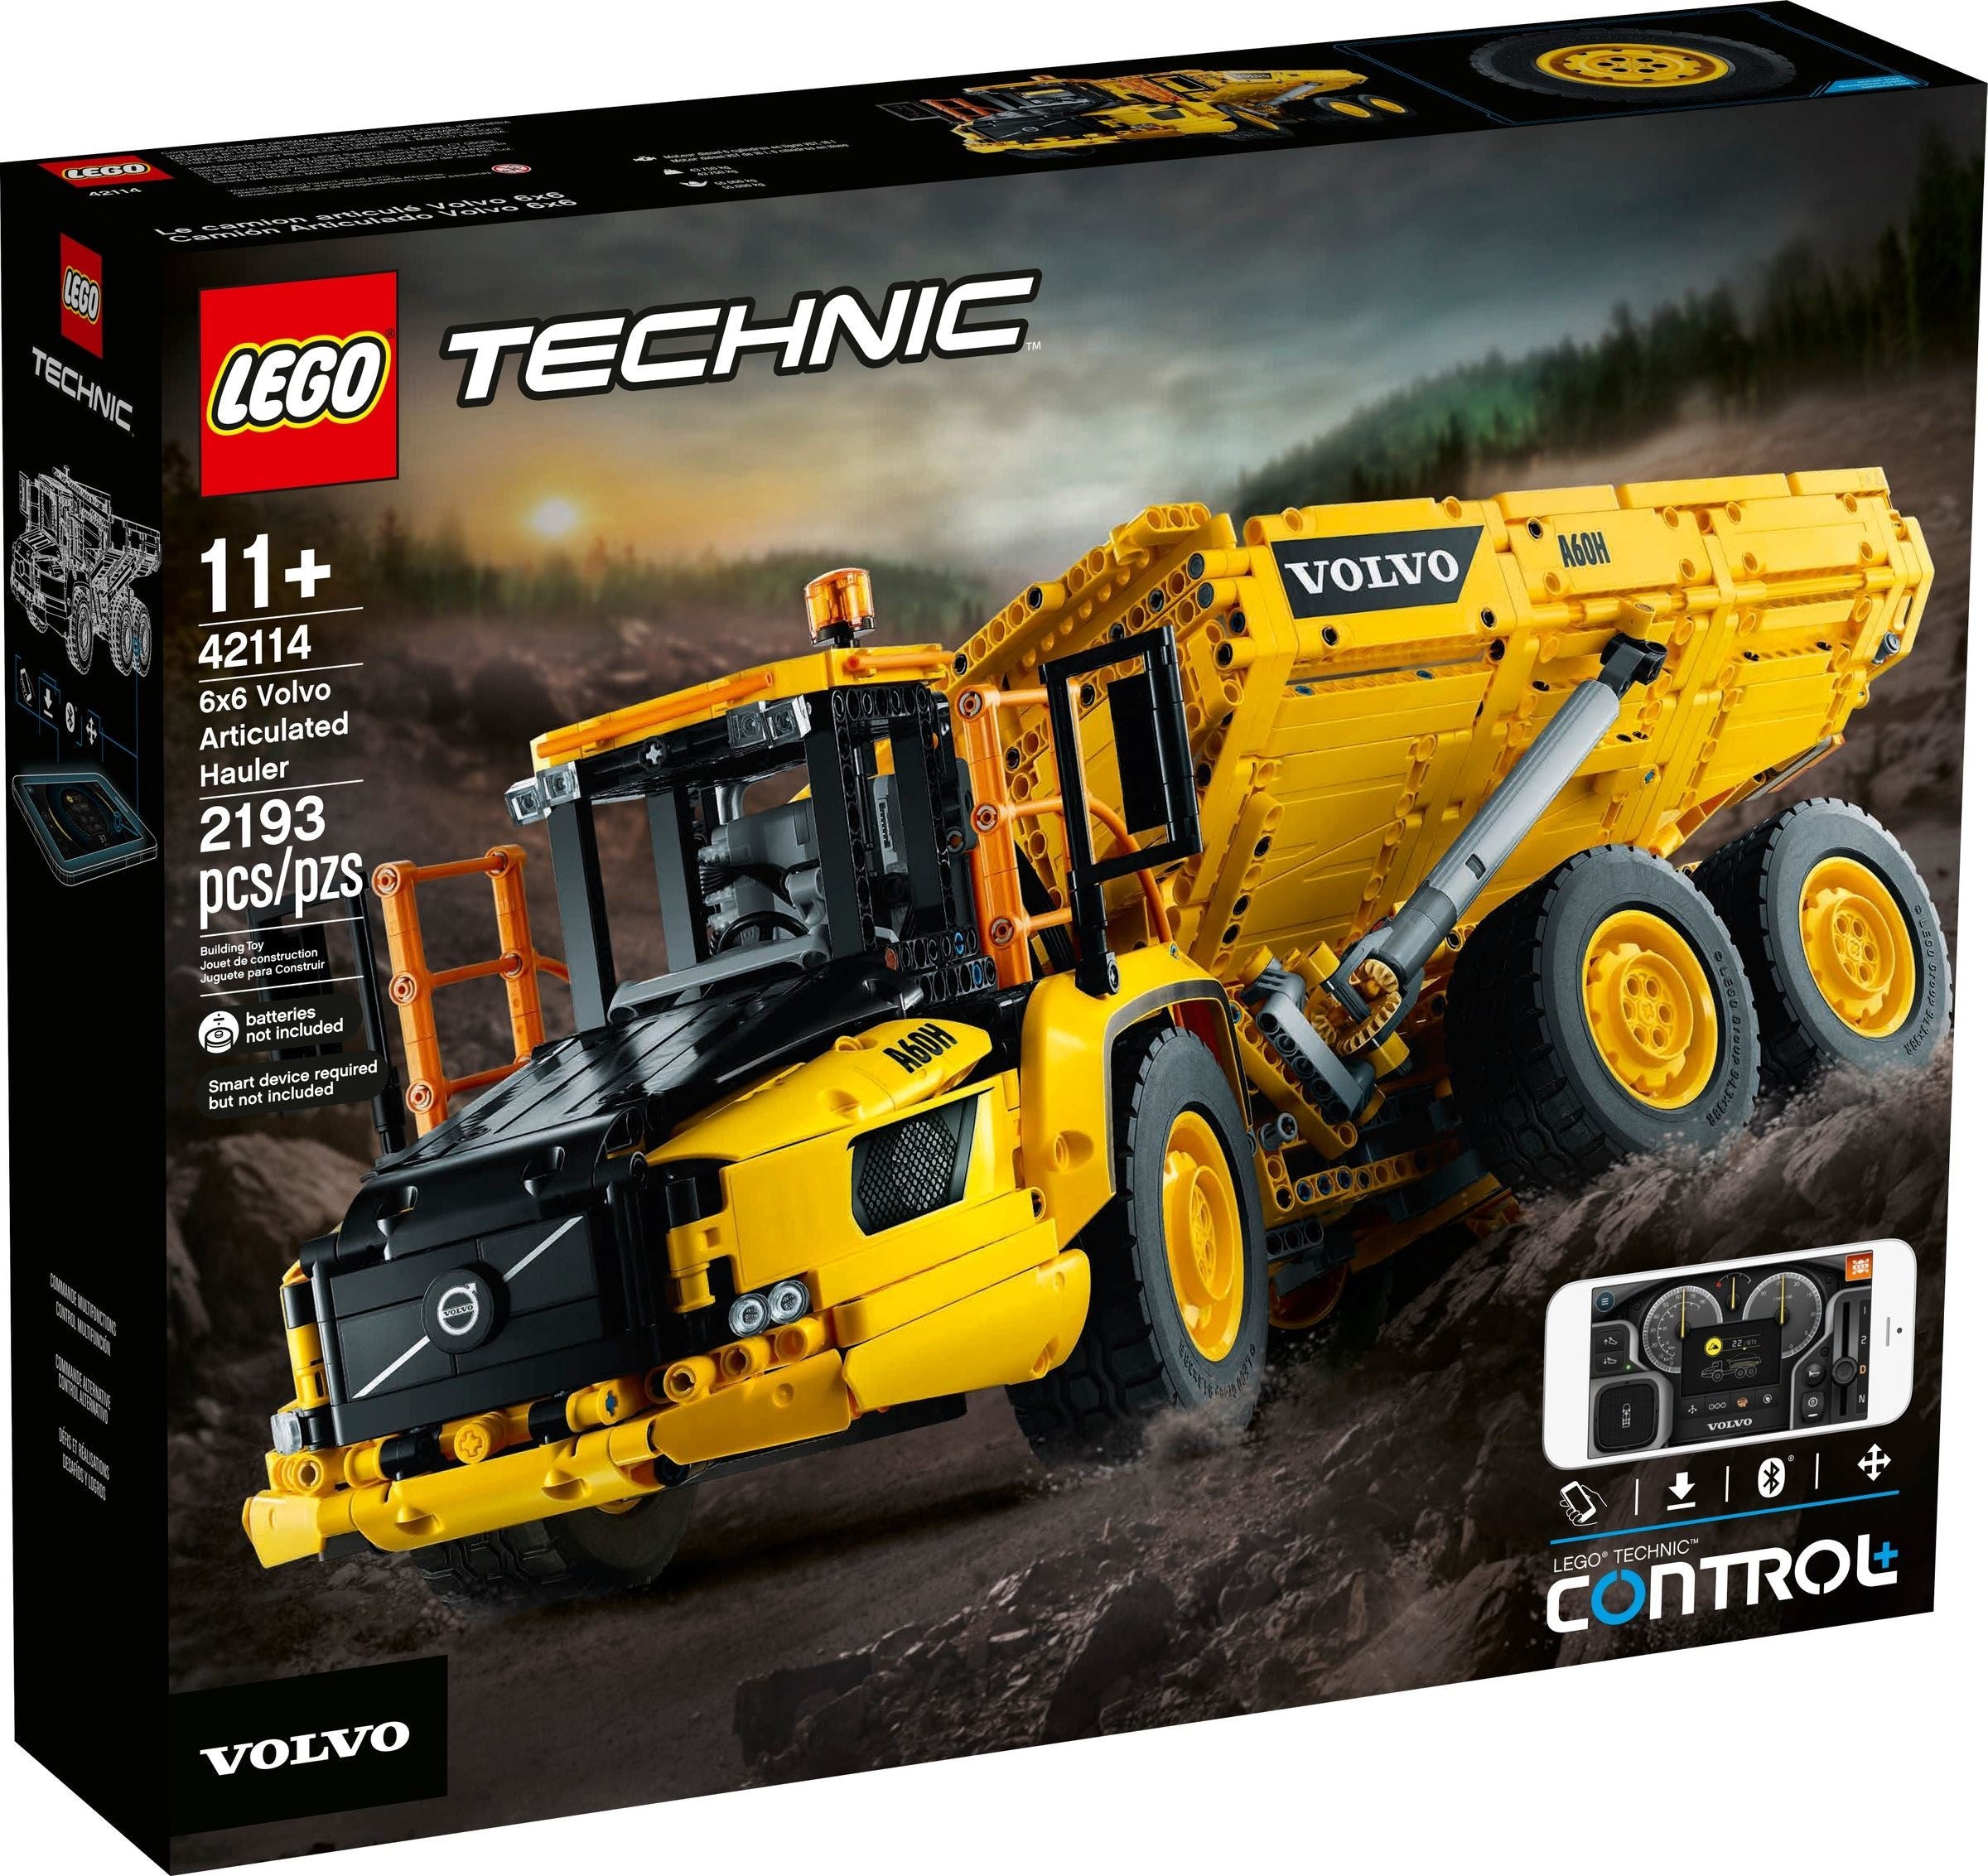 Lego Technic 42114 - 6x6 Volvo Articulated Hauler